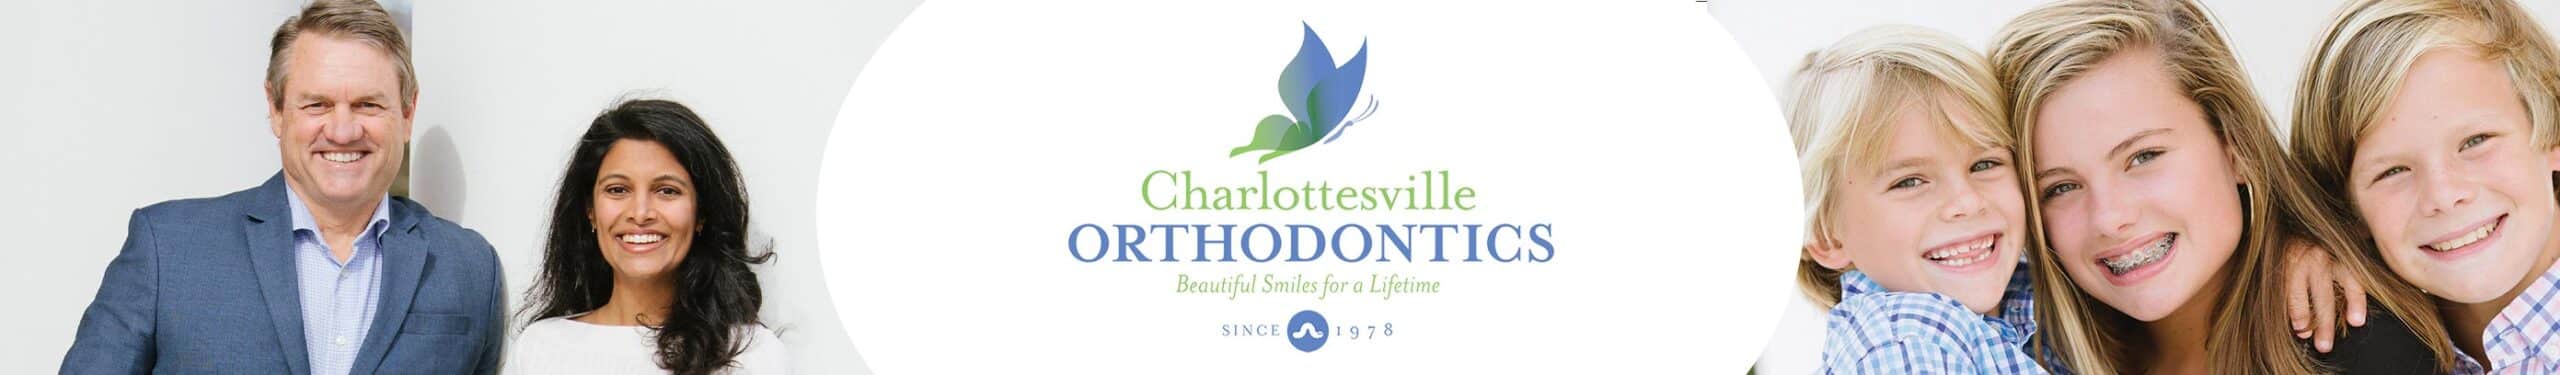 Charlottesville Orthodontics - Charlottesville's Premier Orthodontist